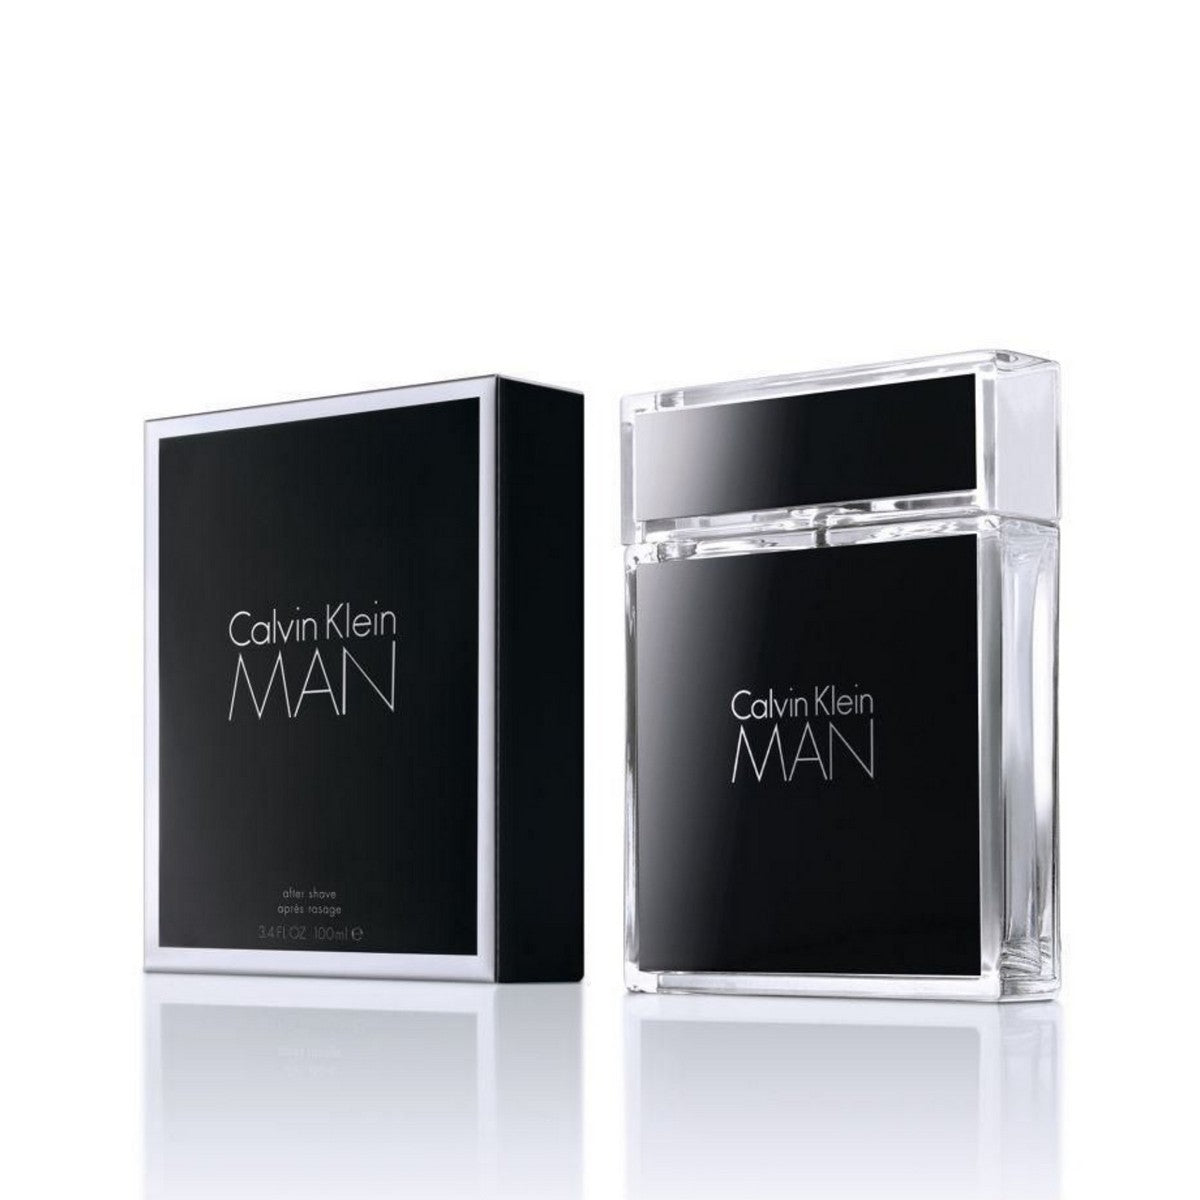 Calvin Klein Black Man EDT 100ML - Makeup MSash PakiMSan - Calvin Klein